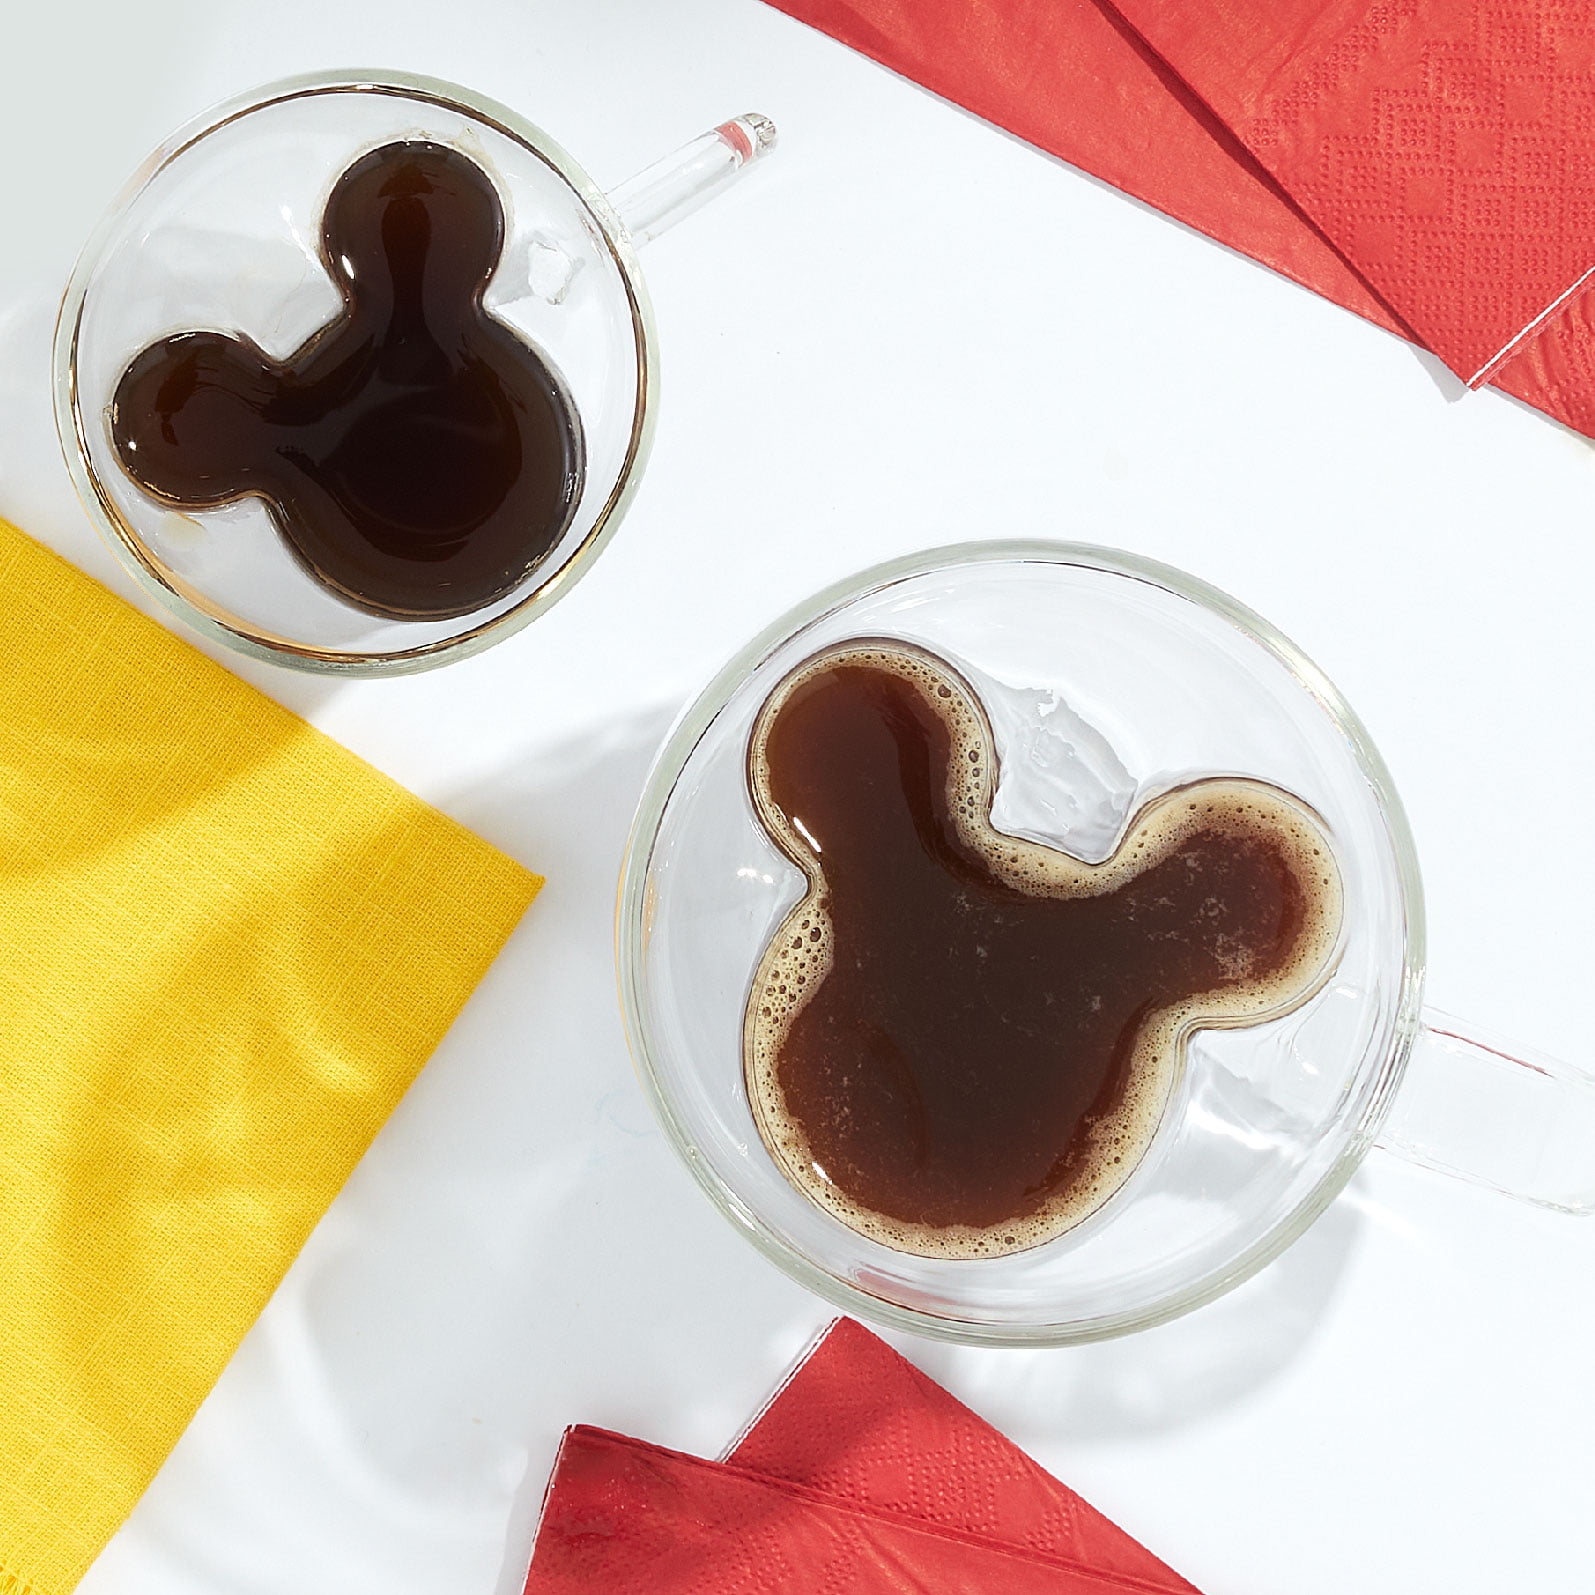 JoyJolt Disney Mickey Mouse 3D Double Wall Glass Espresso Cups 5.4 Oz Set  Of 2